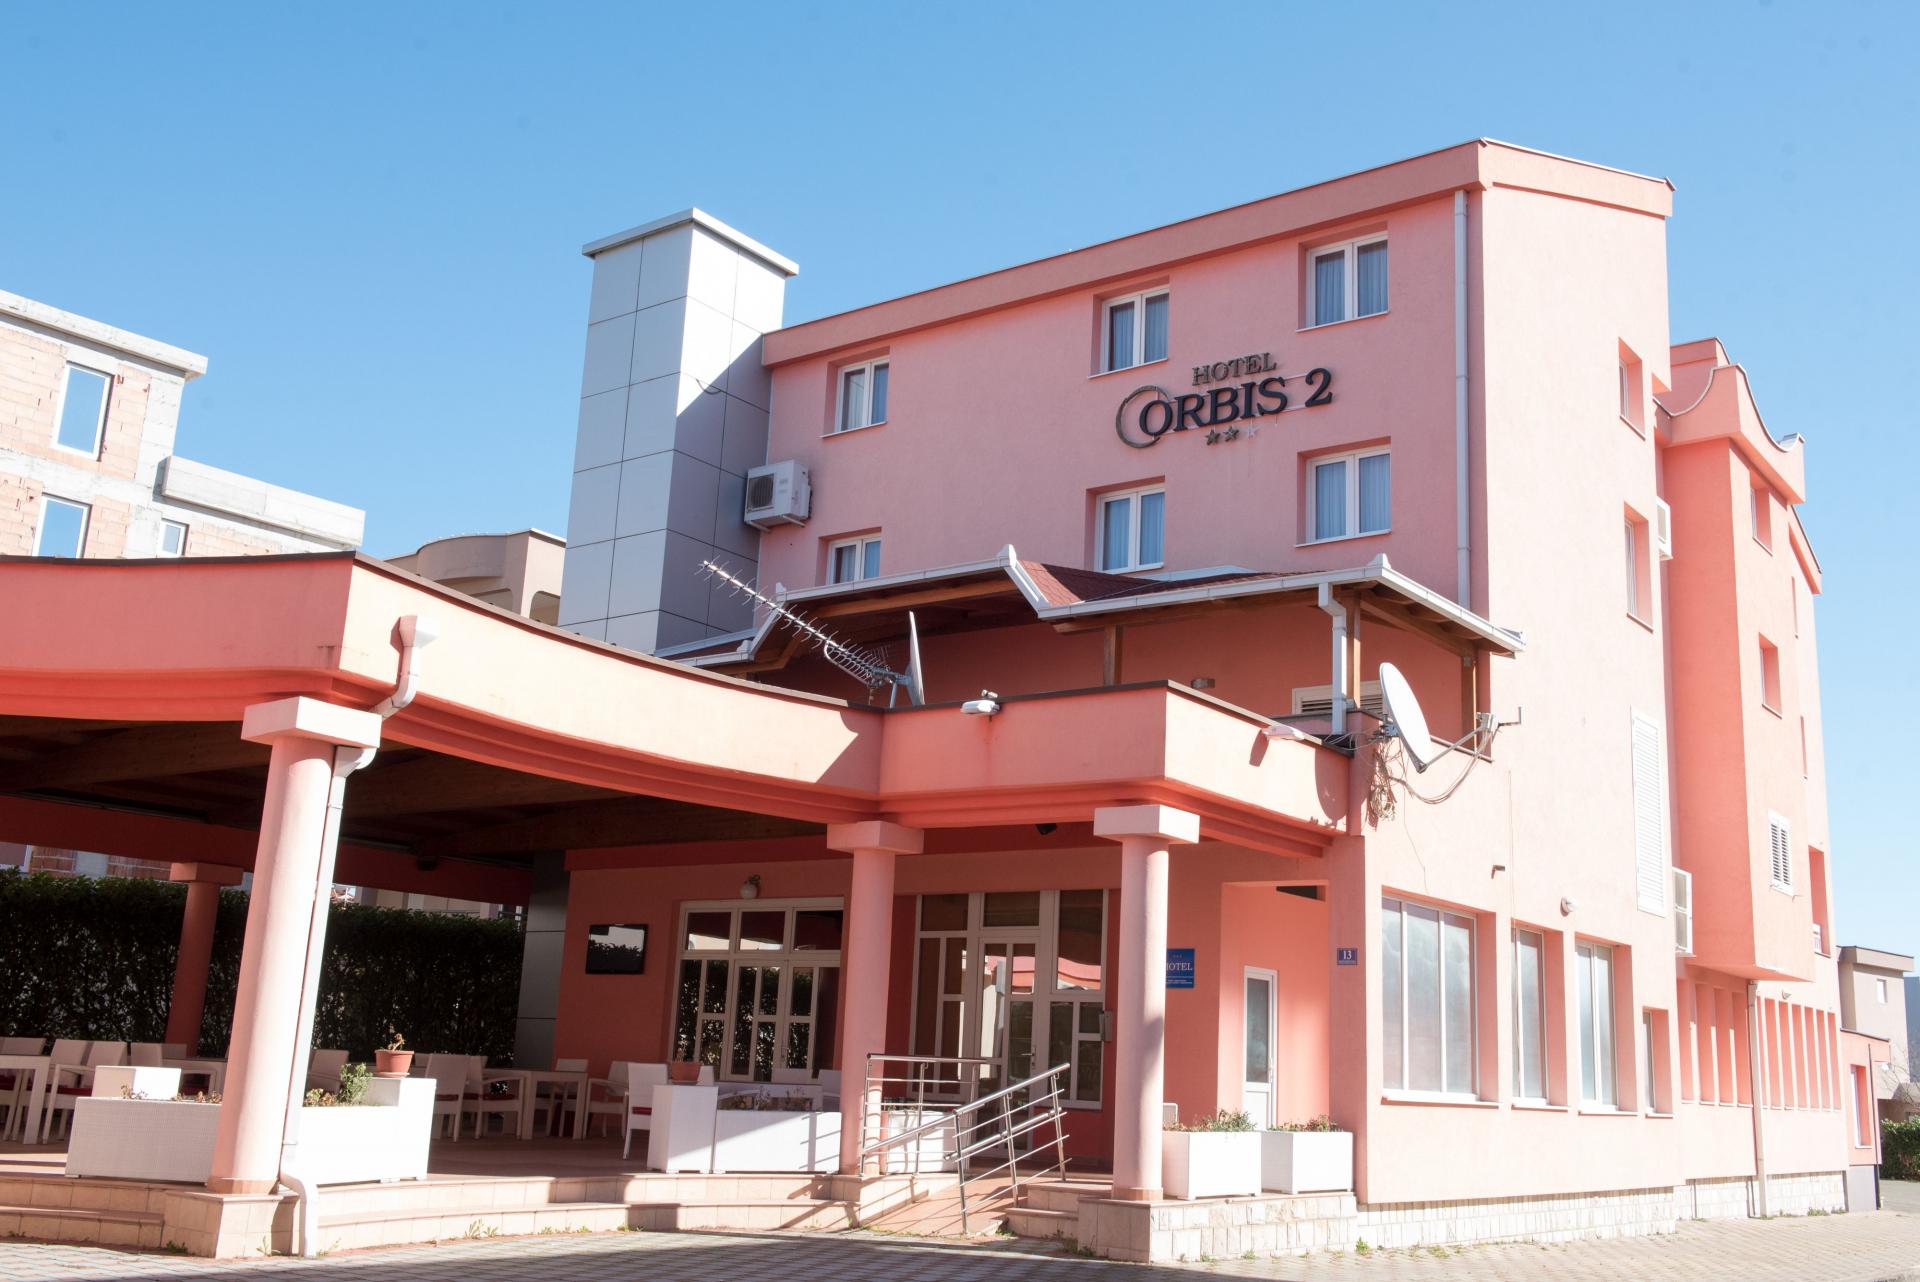 Hotel Orbis 2 - Bośnia i Hercegowina